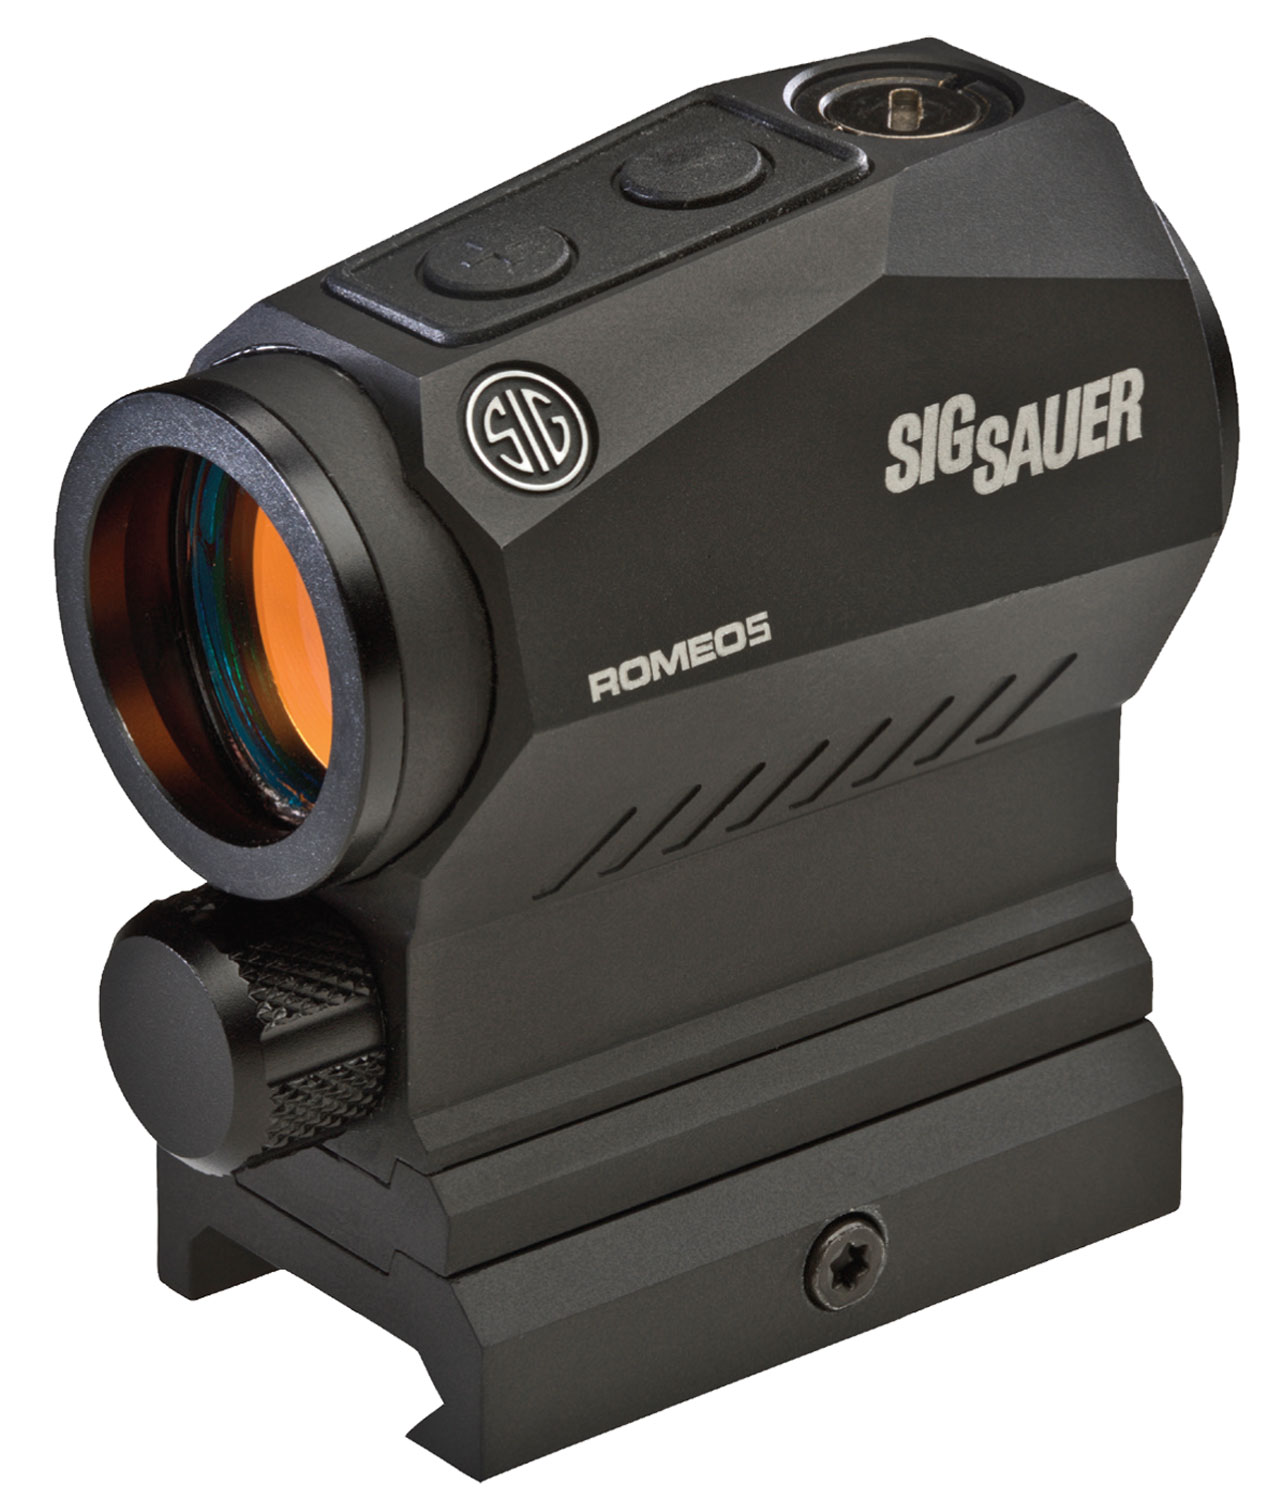 Sig Sauer ROMEO5 XDR Compact Red Dot Sight, 1x20mm, 0.5 MOA, 2 MOA Red Dot/65 MOA Circle Dot, 1 x AAA Battery, Picatinny/Co-Witness Mounts, Black, SOR52102